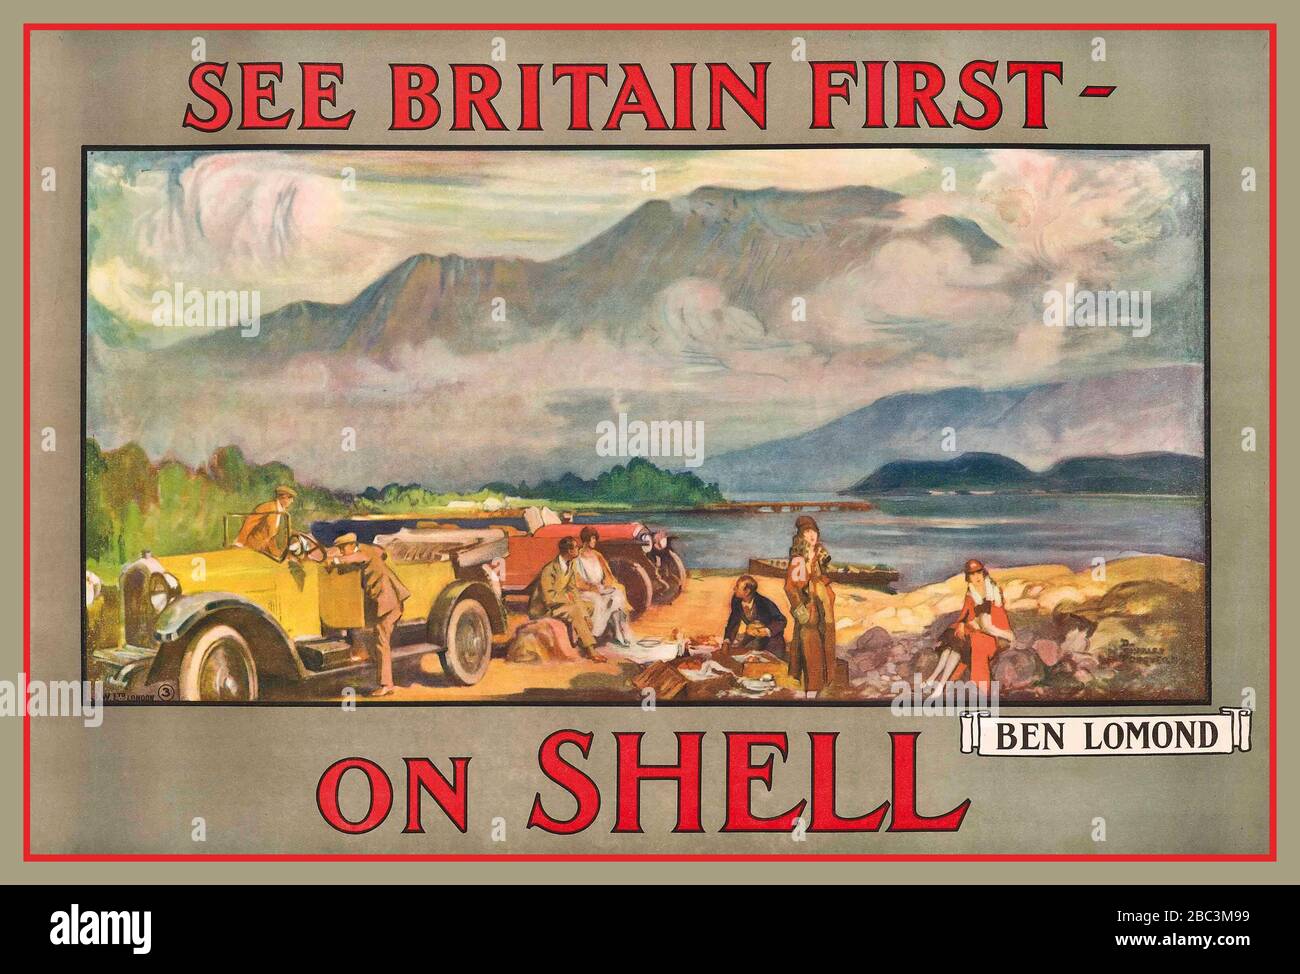 Archivio d'epoca Poster Advertising for Shell Petroleum "SEE BRITAIN FIRST - ON SHELL", litografia offset "BEN LOMOND" a colori, 1925, stampata da John Waddington, Londra, Charles D. Fouqueray (1869-1956) Foto Stock